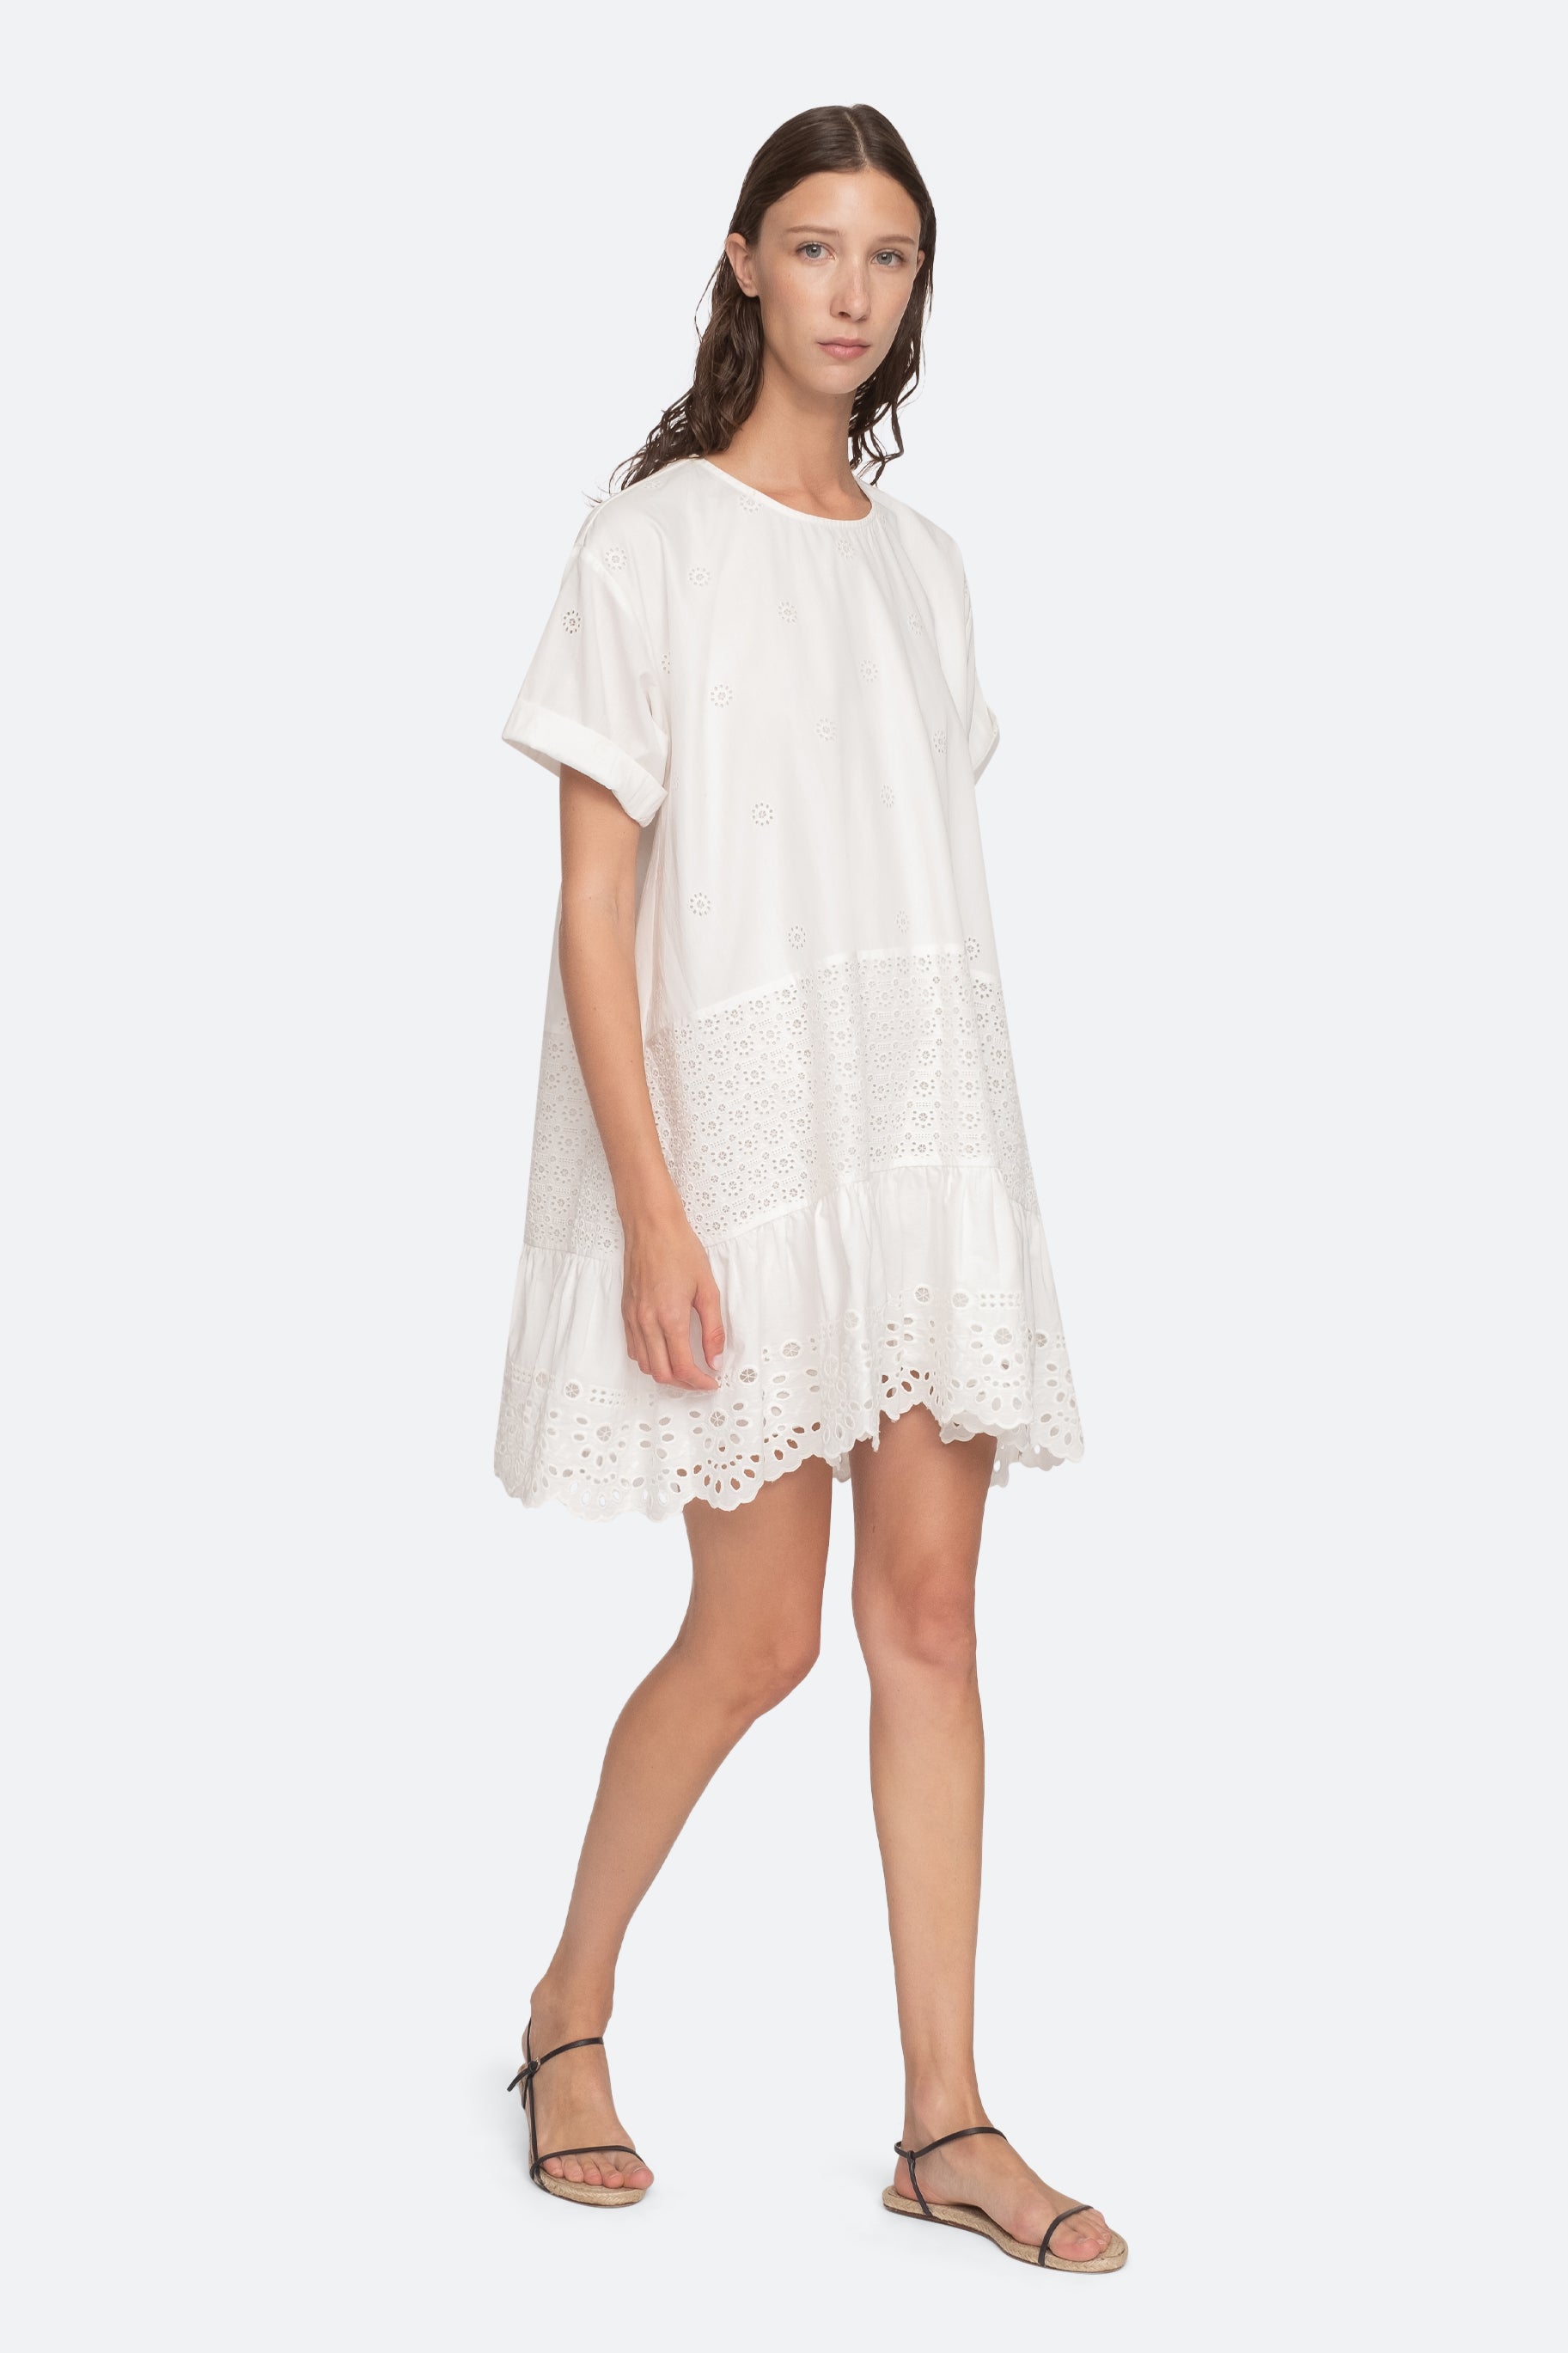 Elysse Embroidery Tunic Dress White